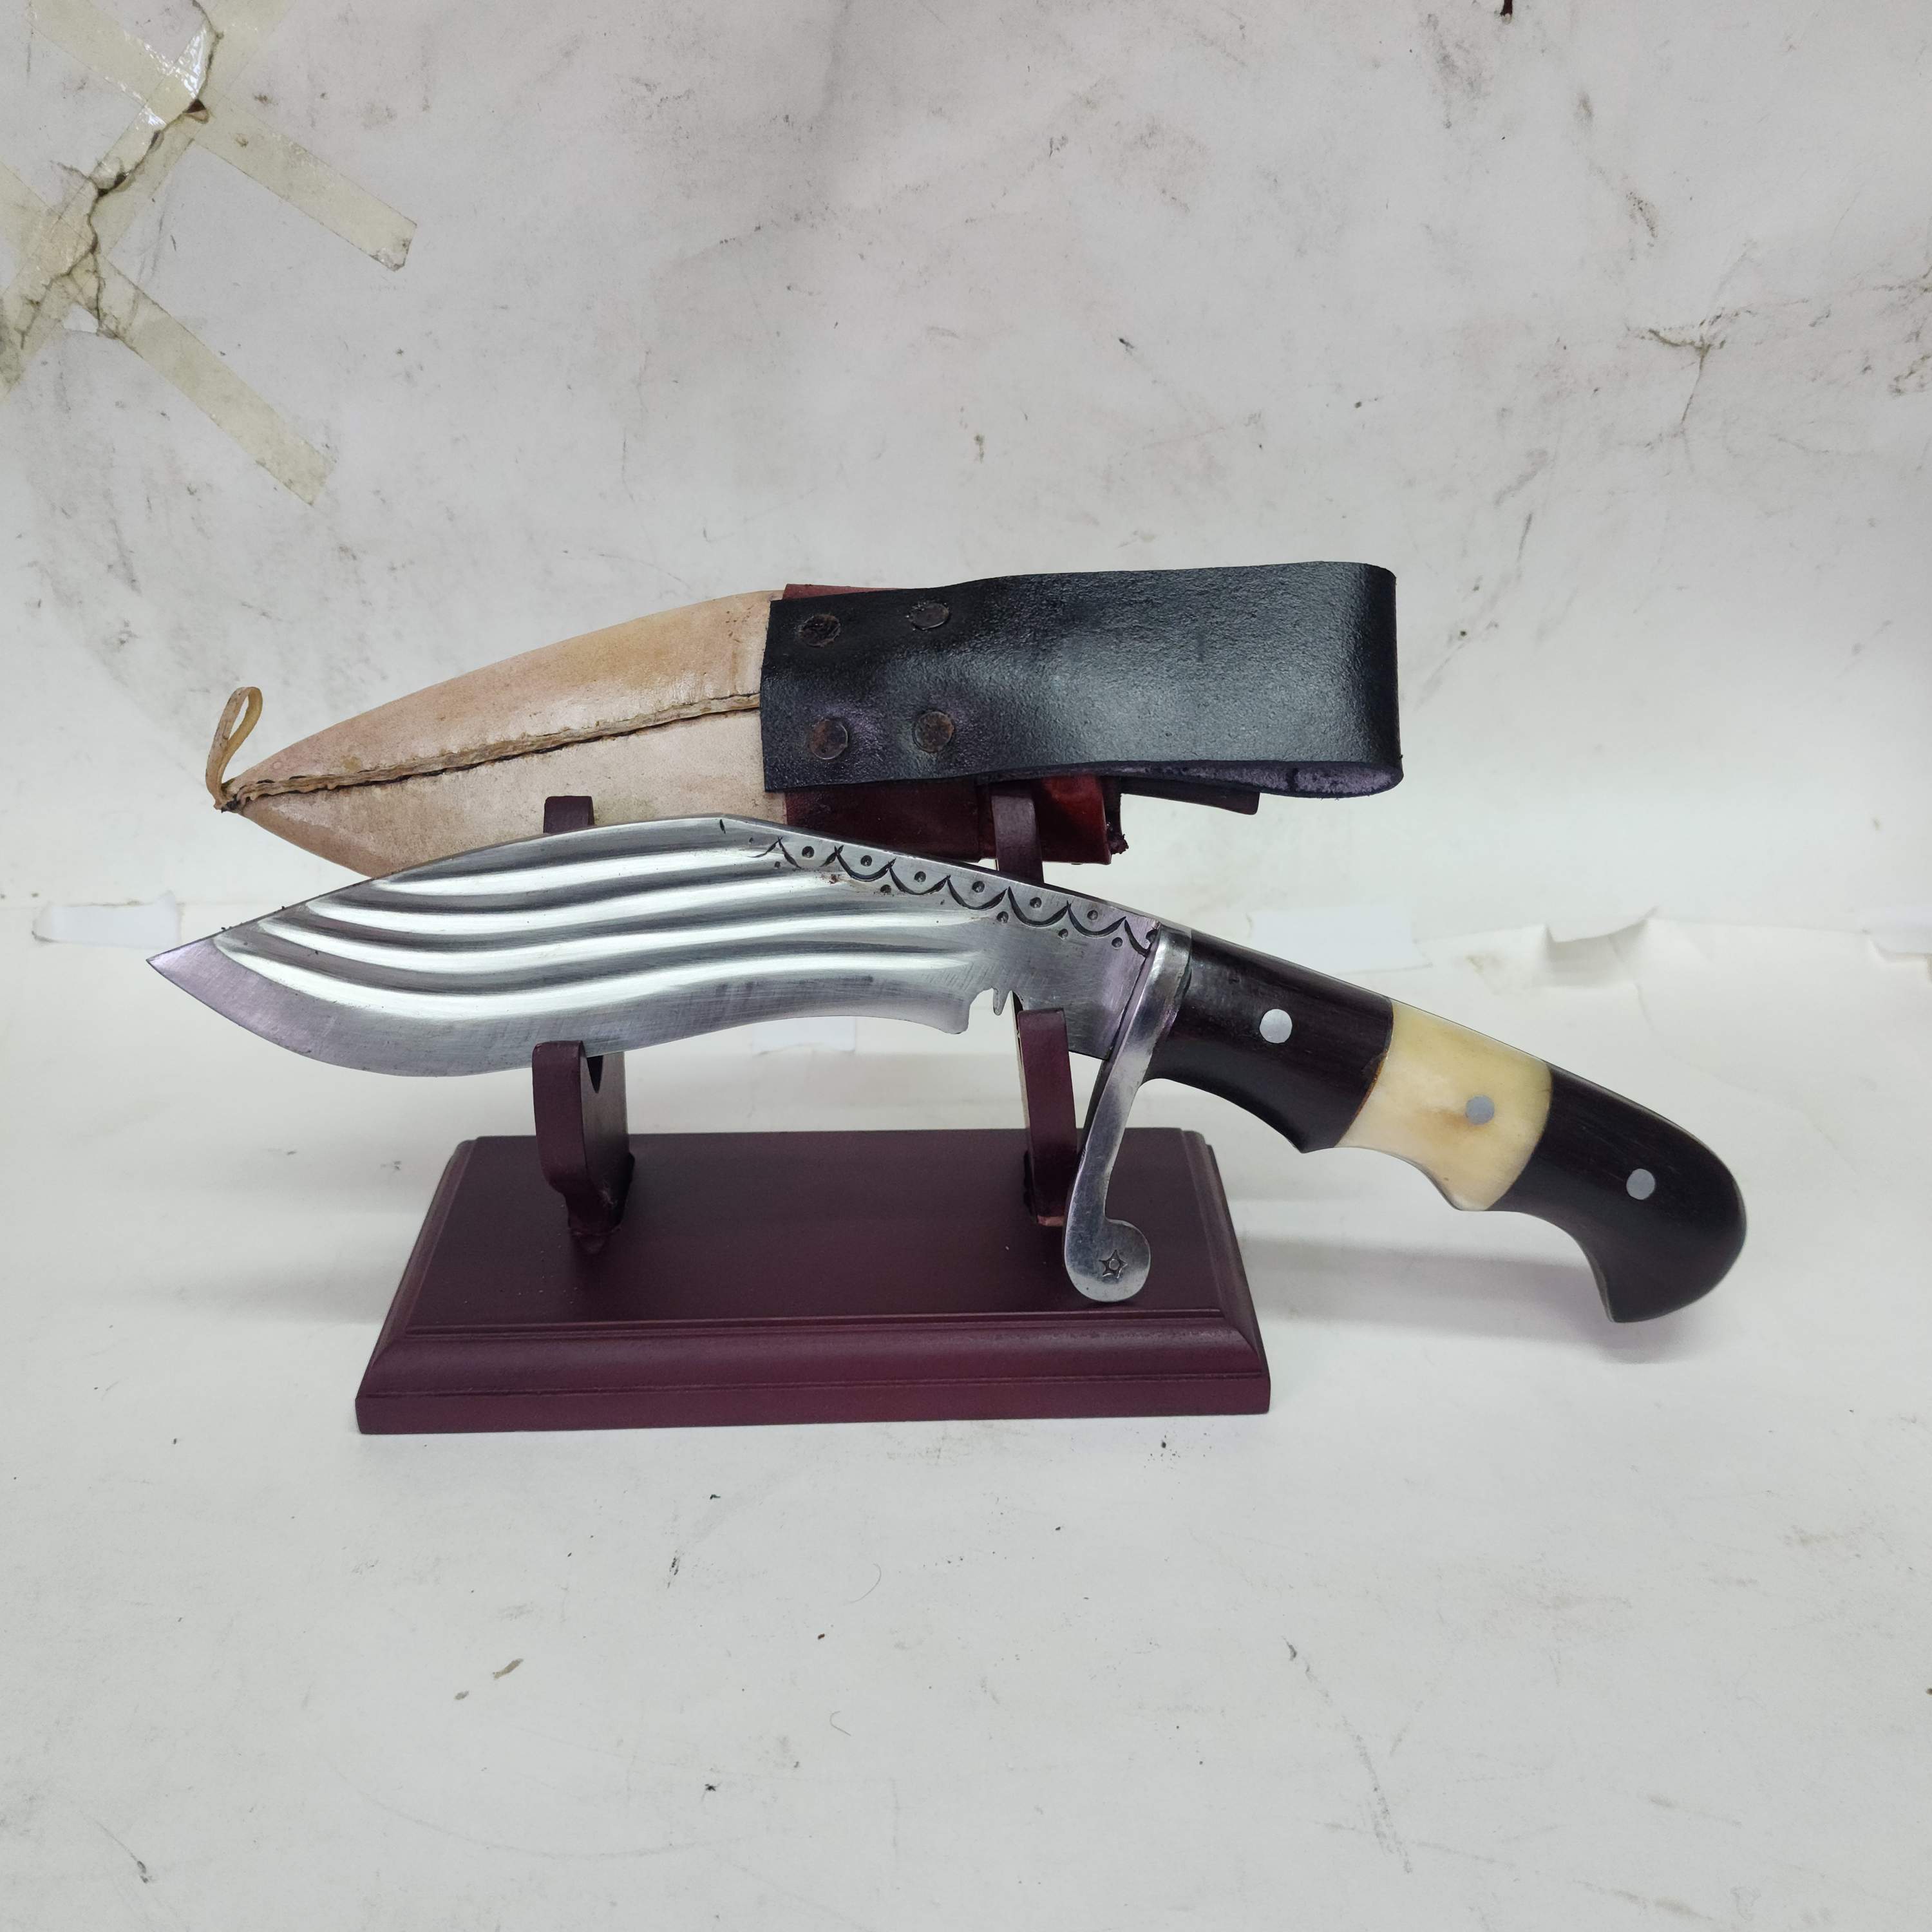 6 Inch, khukuri, Gurkha Knife - wood And Bone Handle, Nepali Machete With Leather Cover And Stand